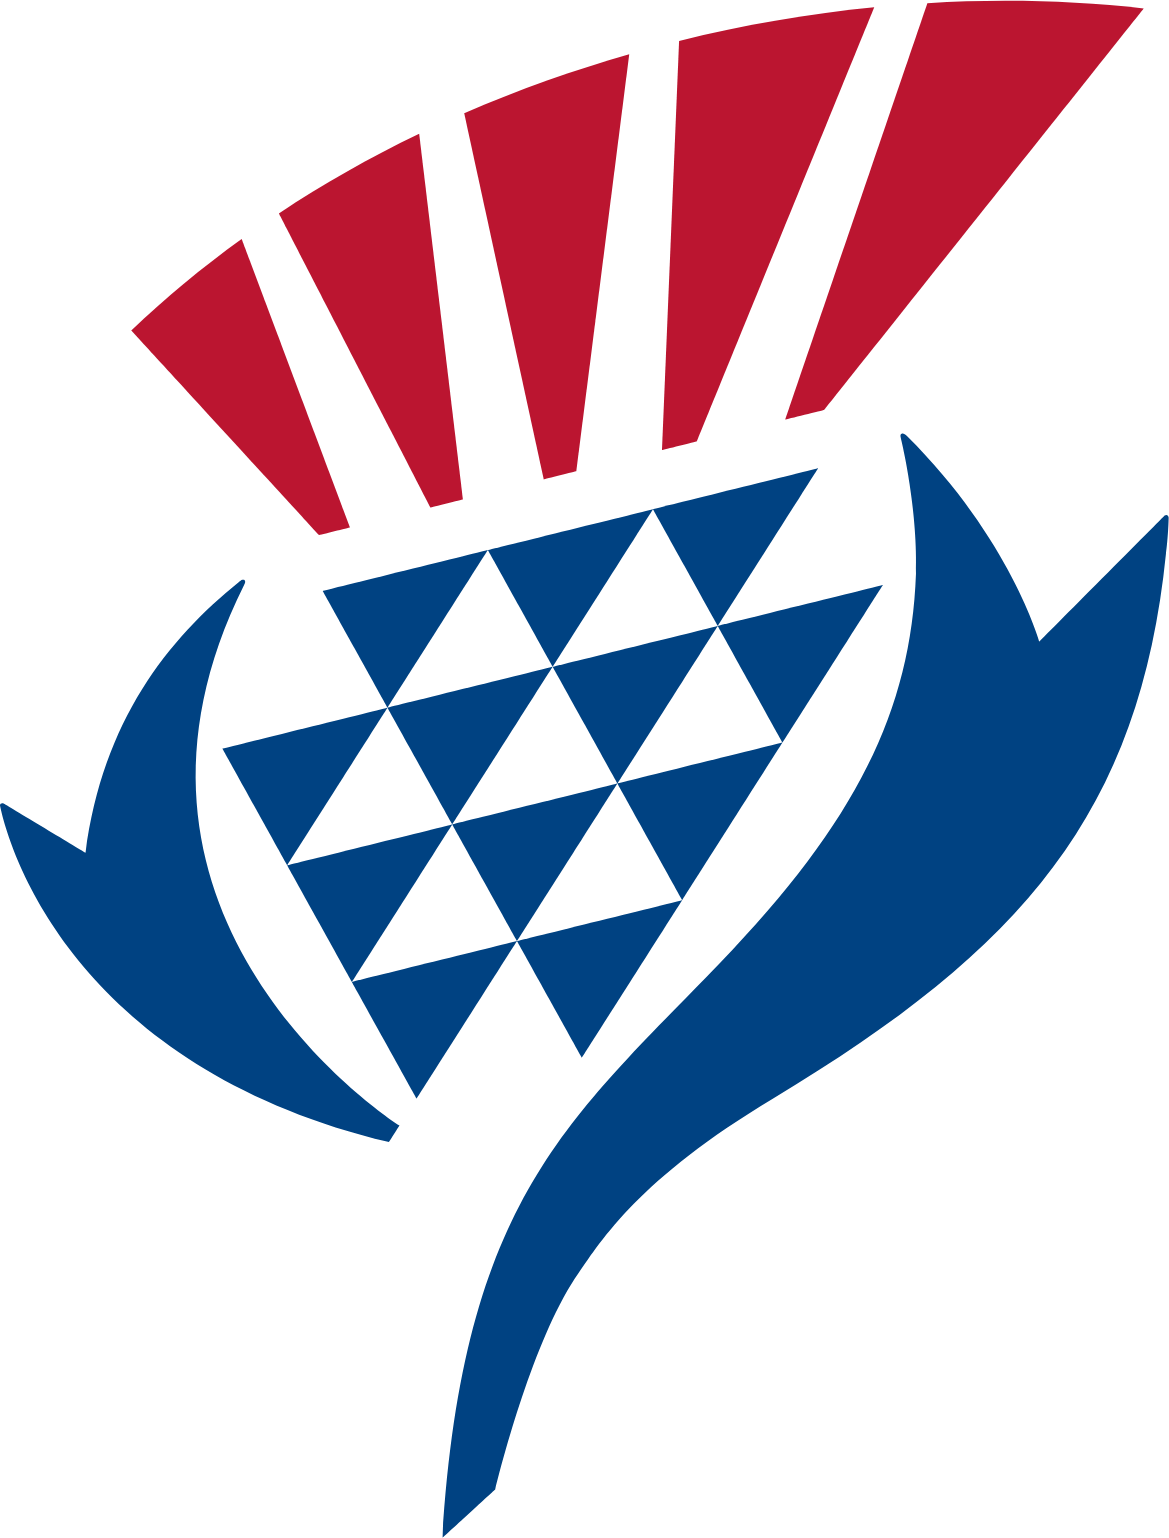 Jardine Matheson logo in transparent PNG and vectorized SVG formats